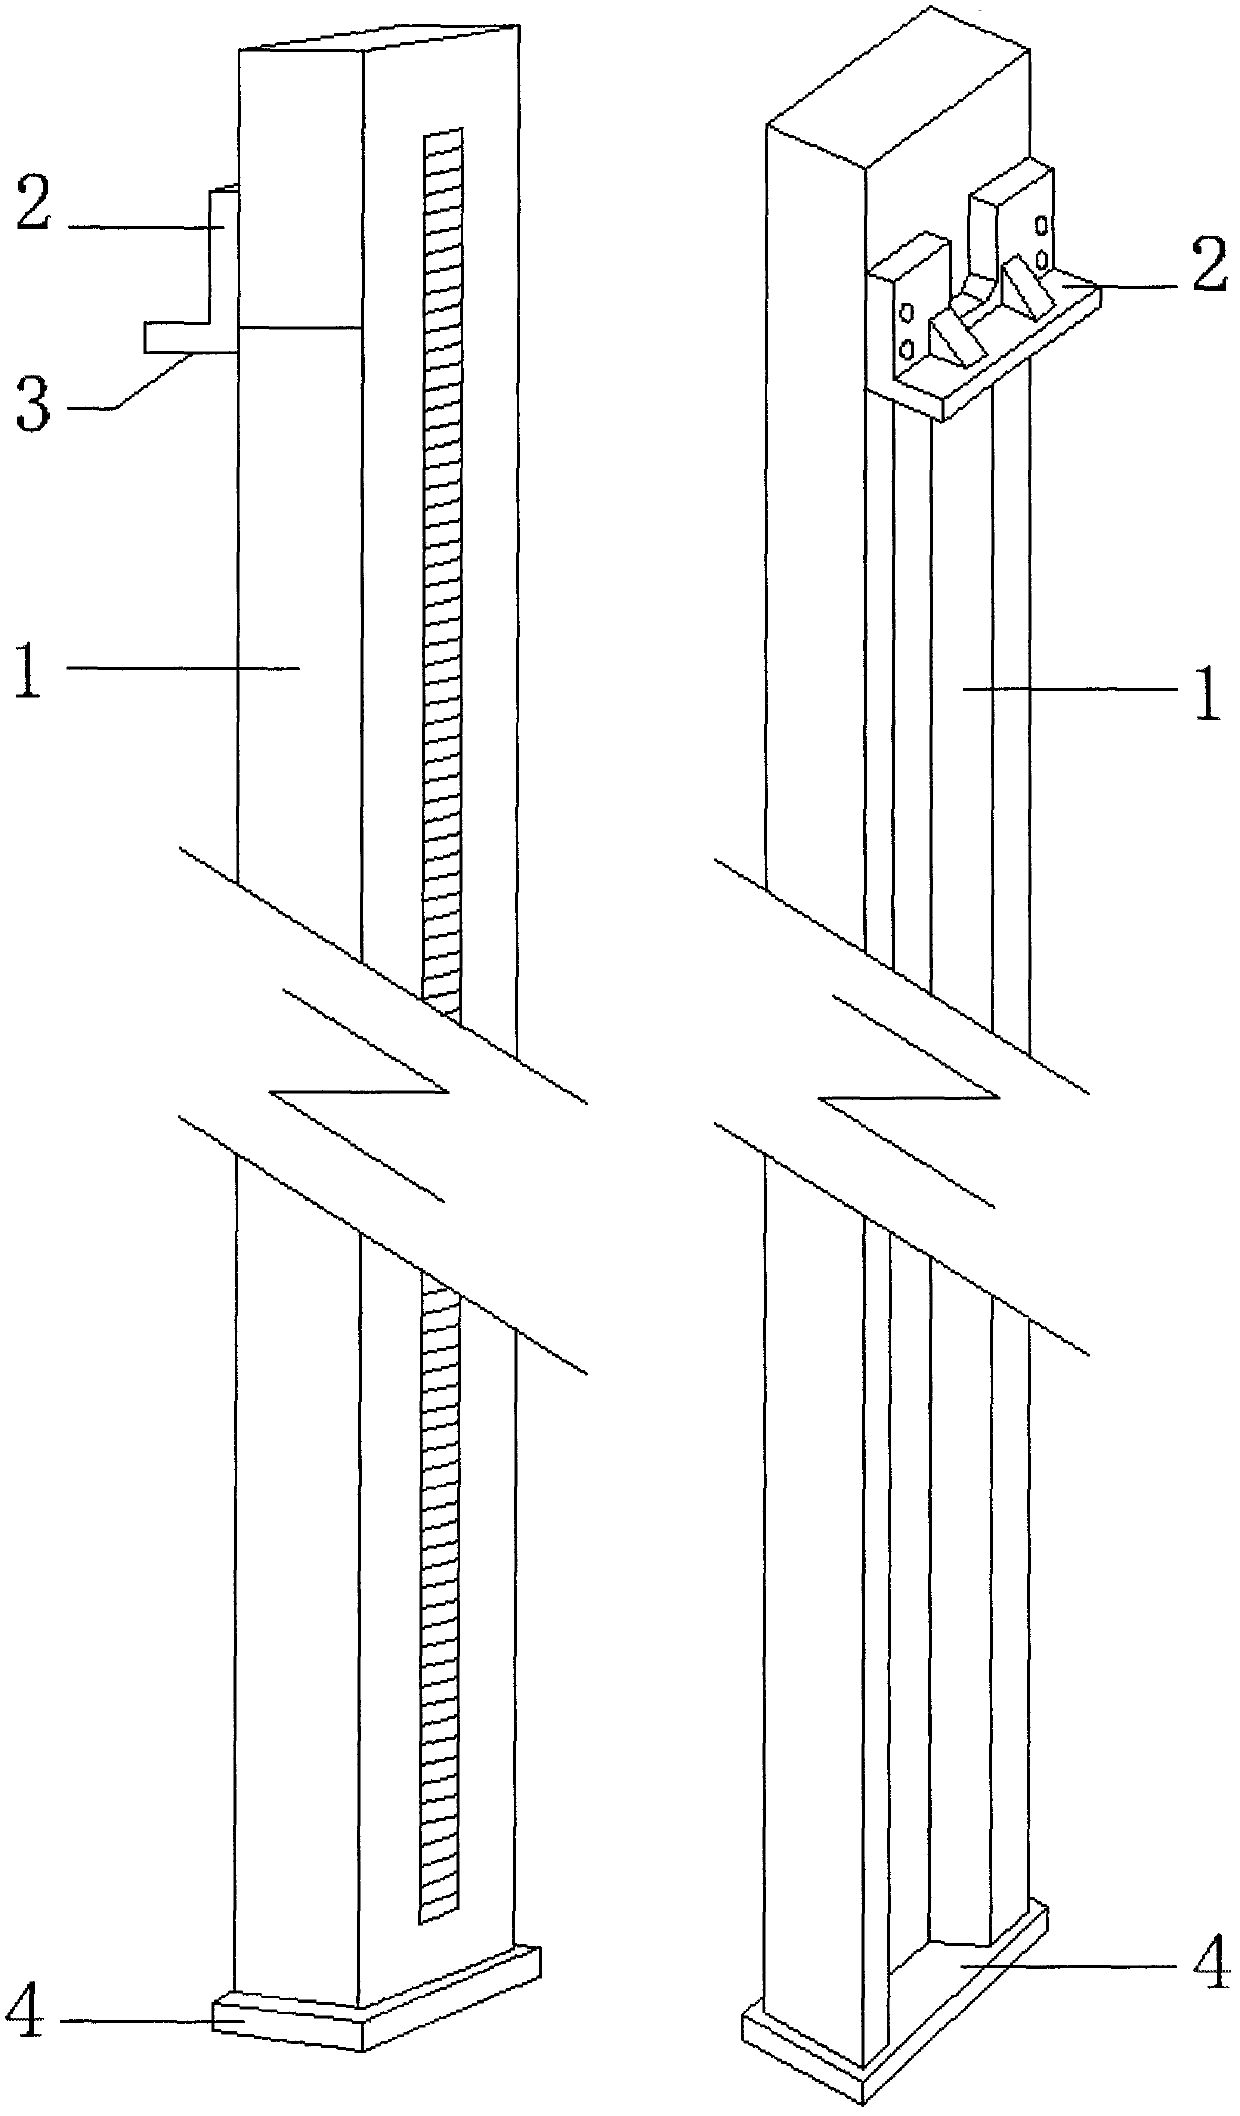 Suspended digital leveling rod and measuring method using same